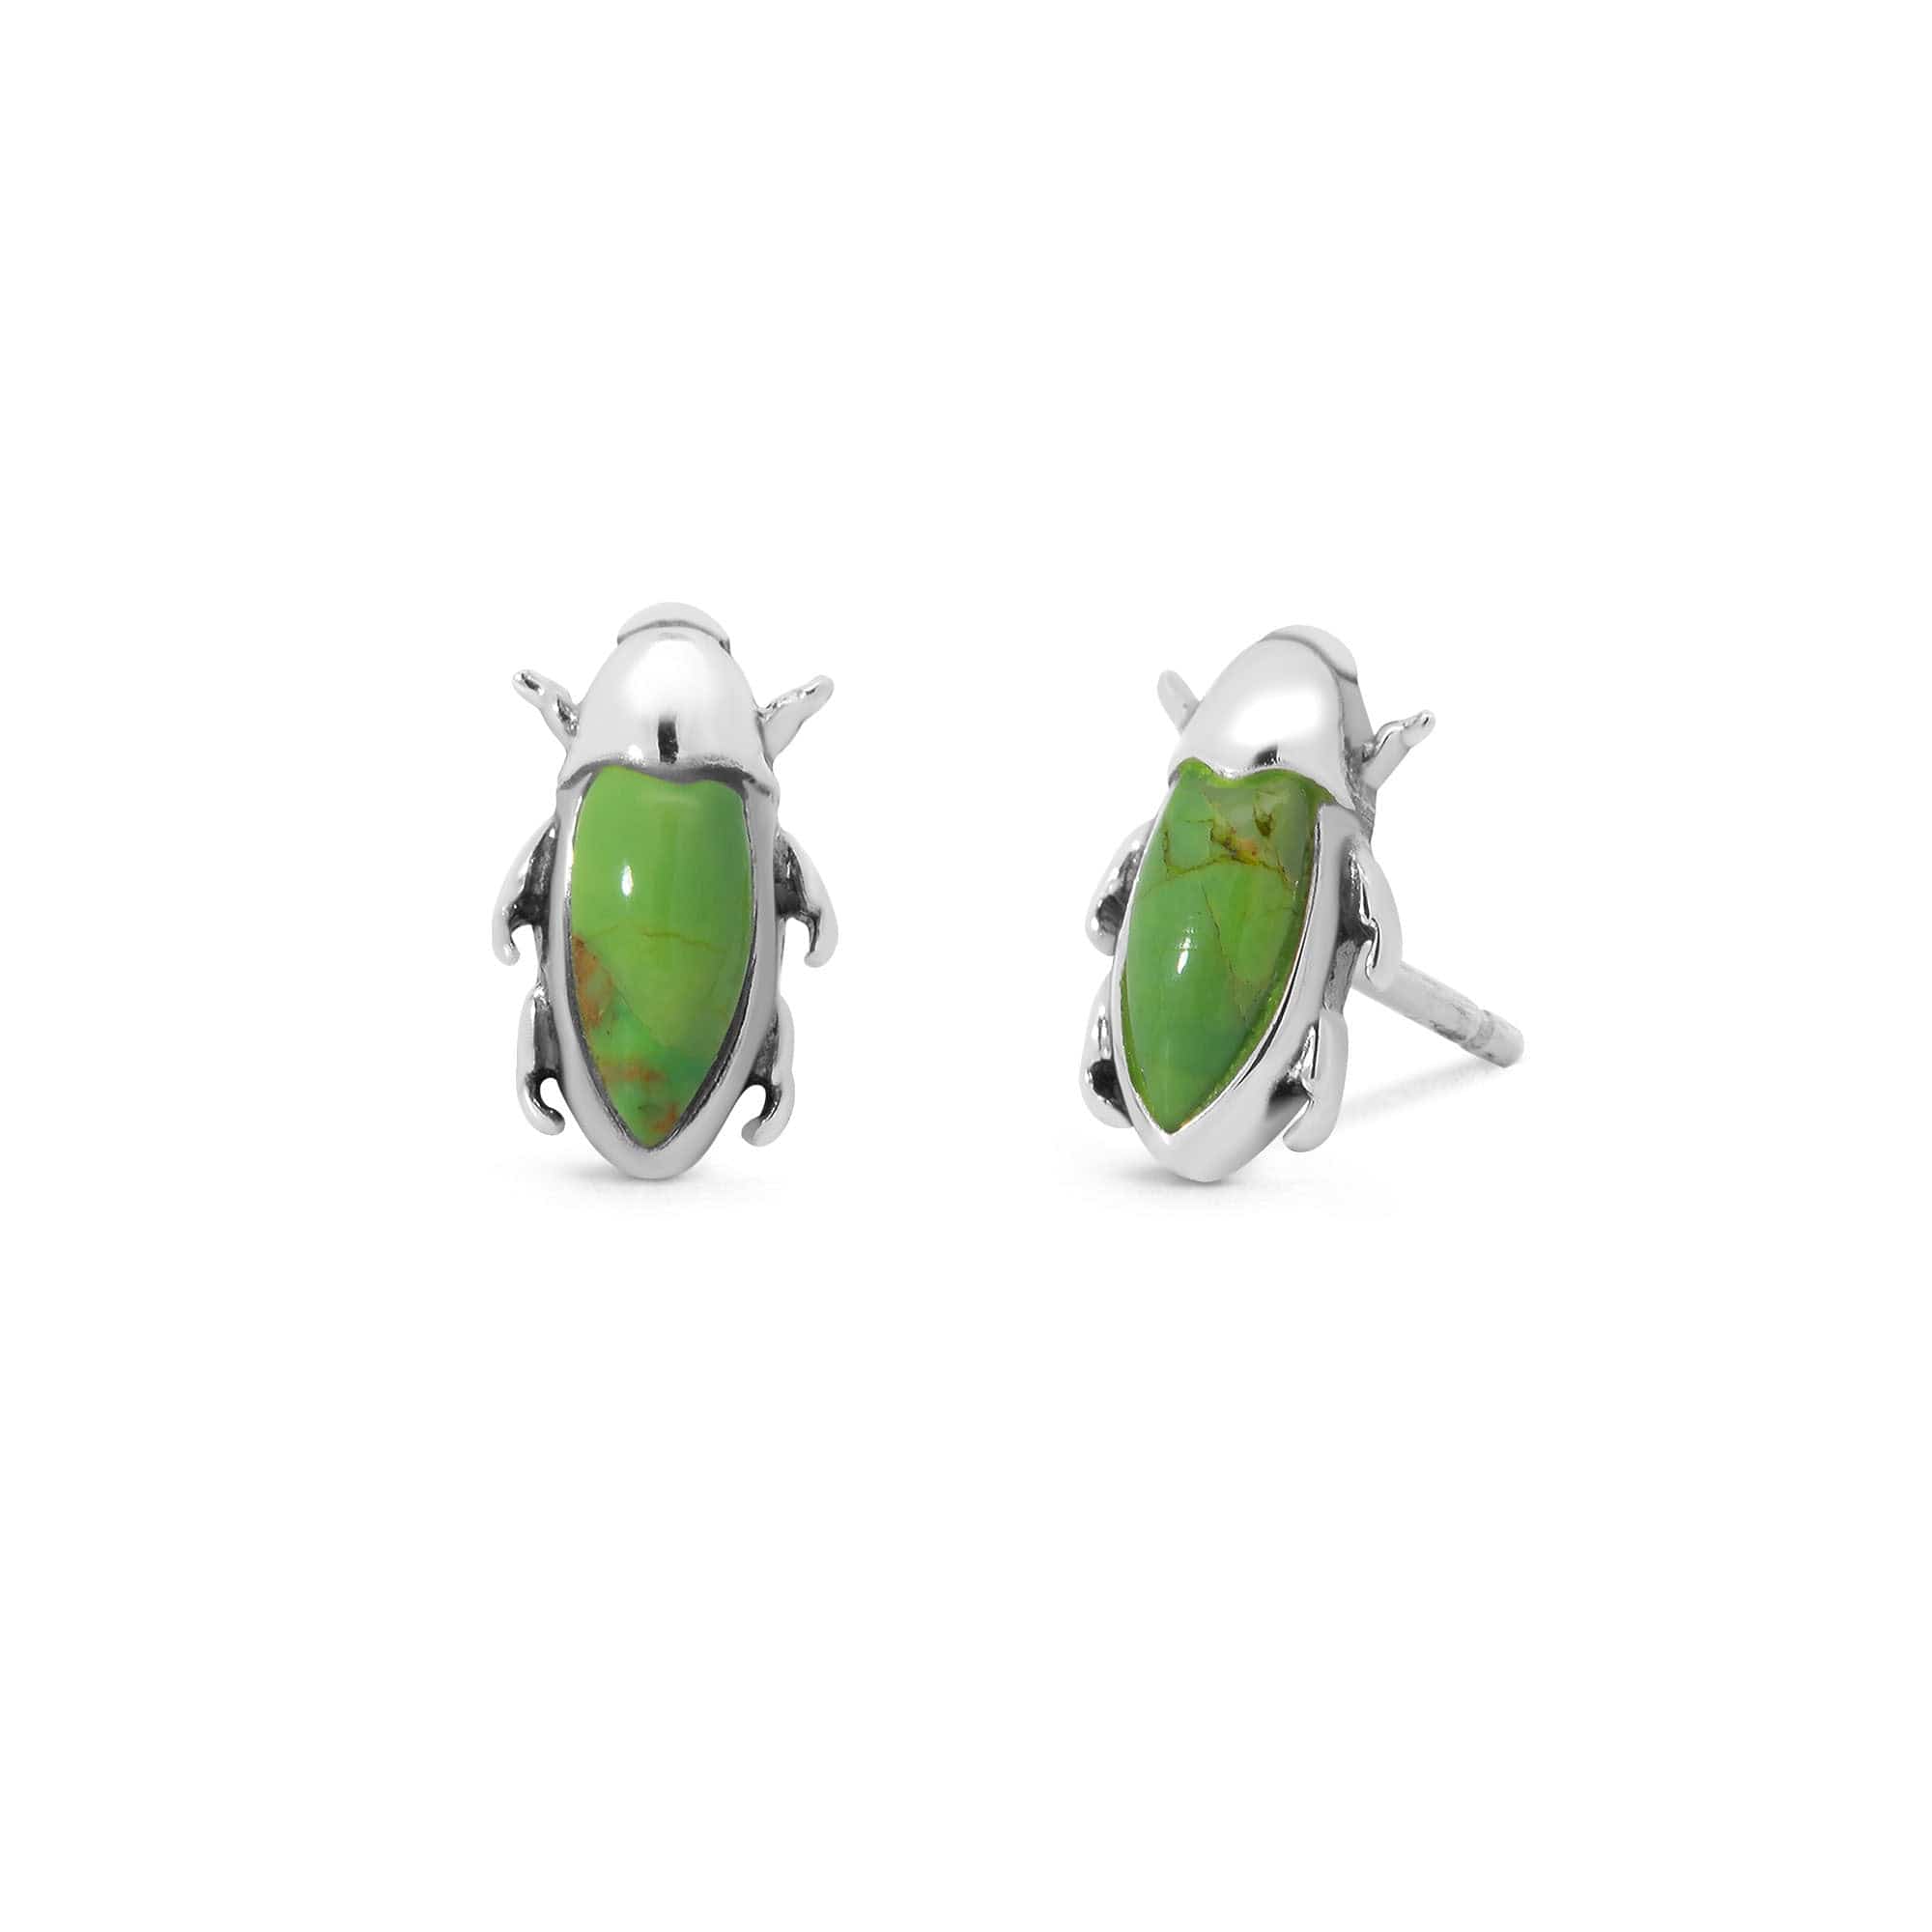 Boma Jewelry Earrings Green Turquoise Bug Stud Earrings with Stone